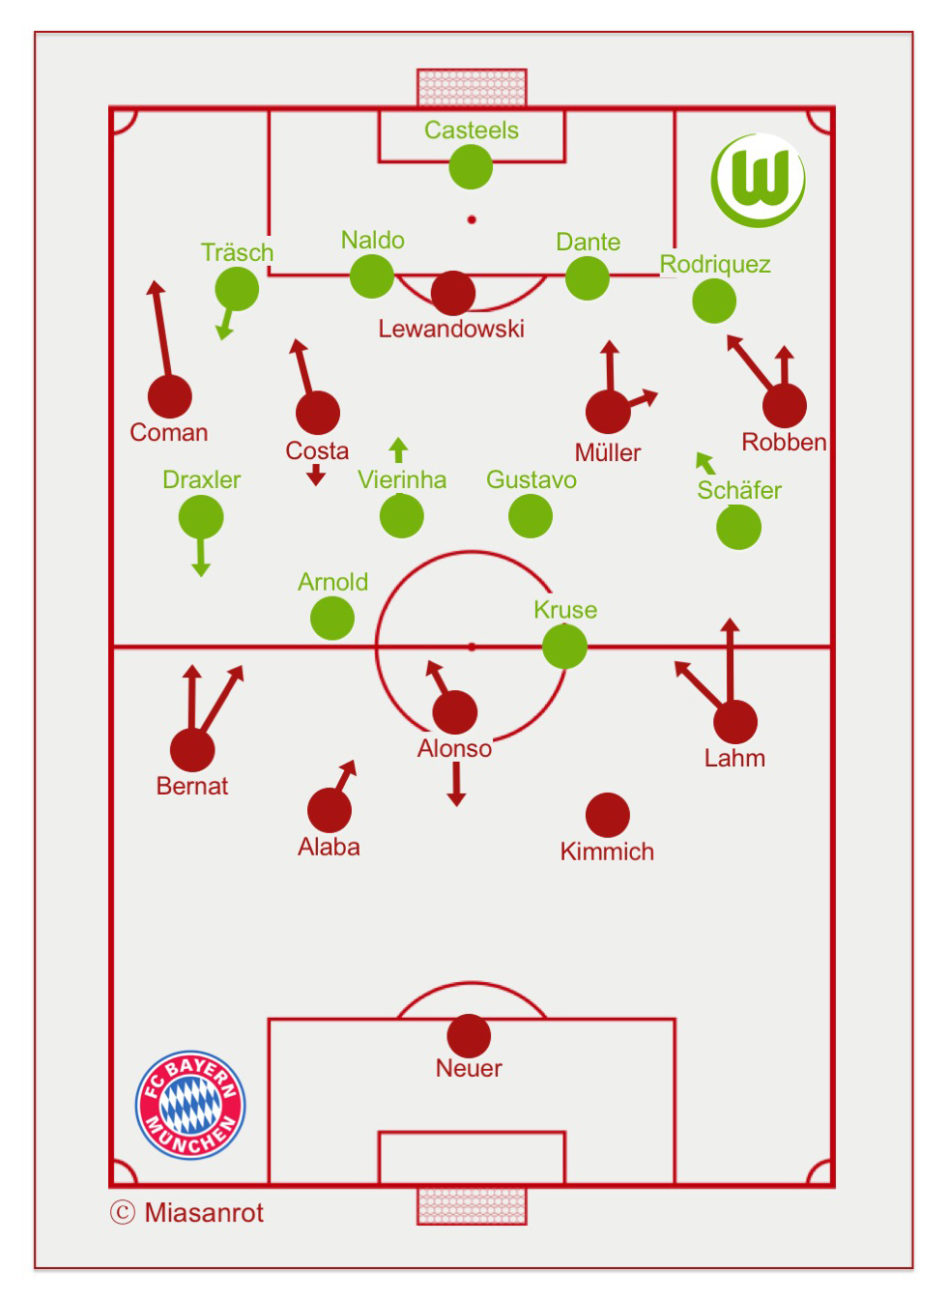 VfL Wolfsburg vs. FC Bayern